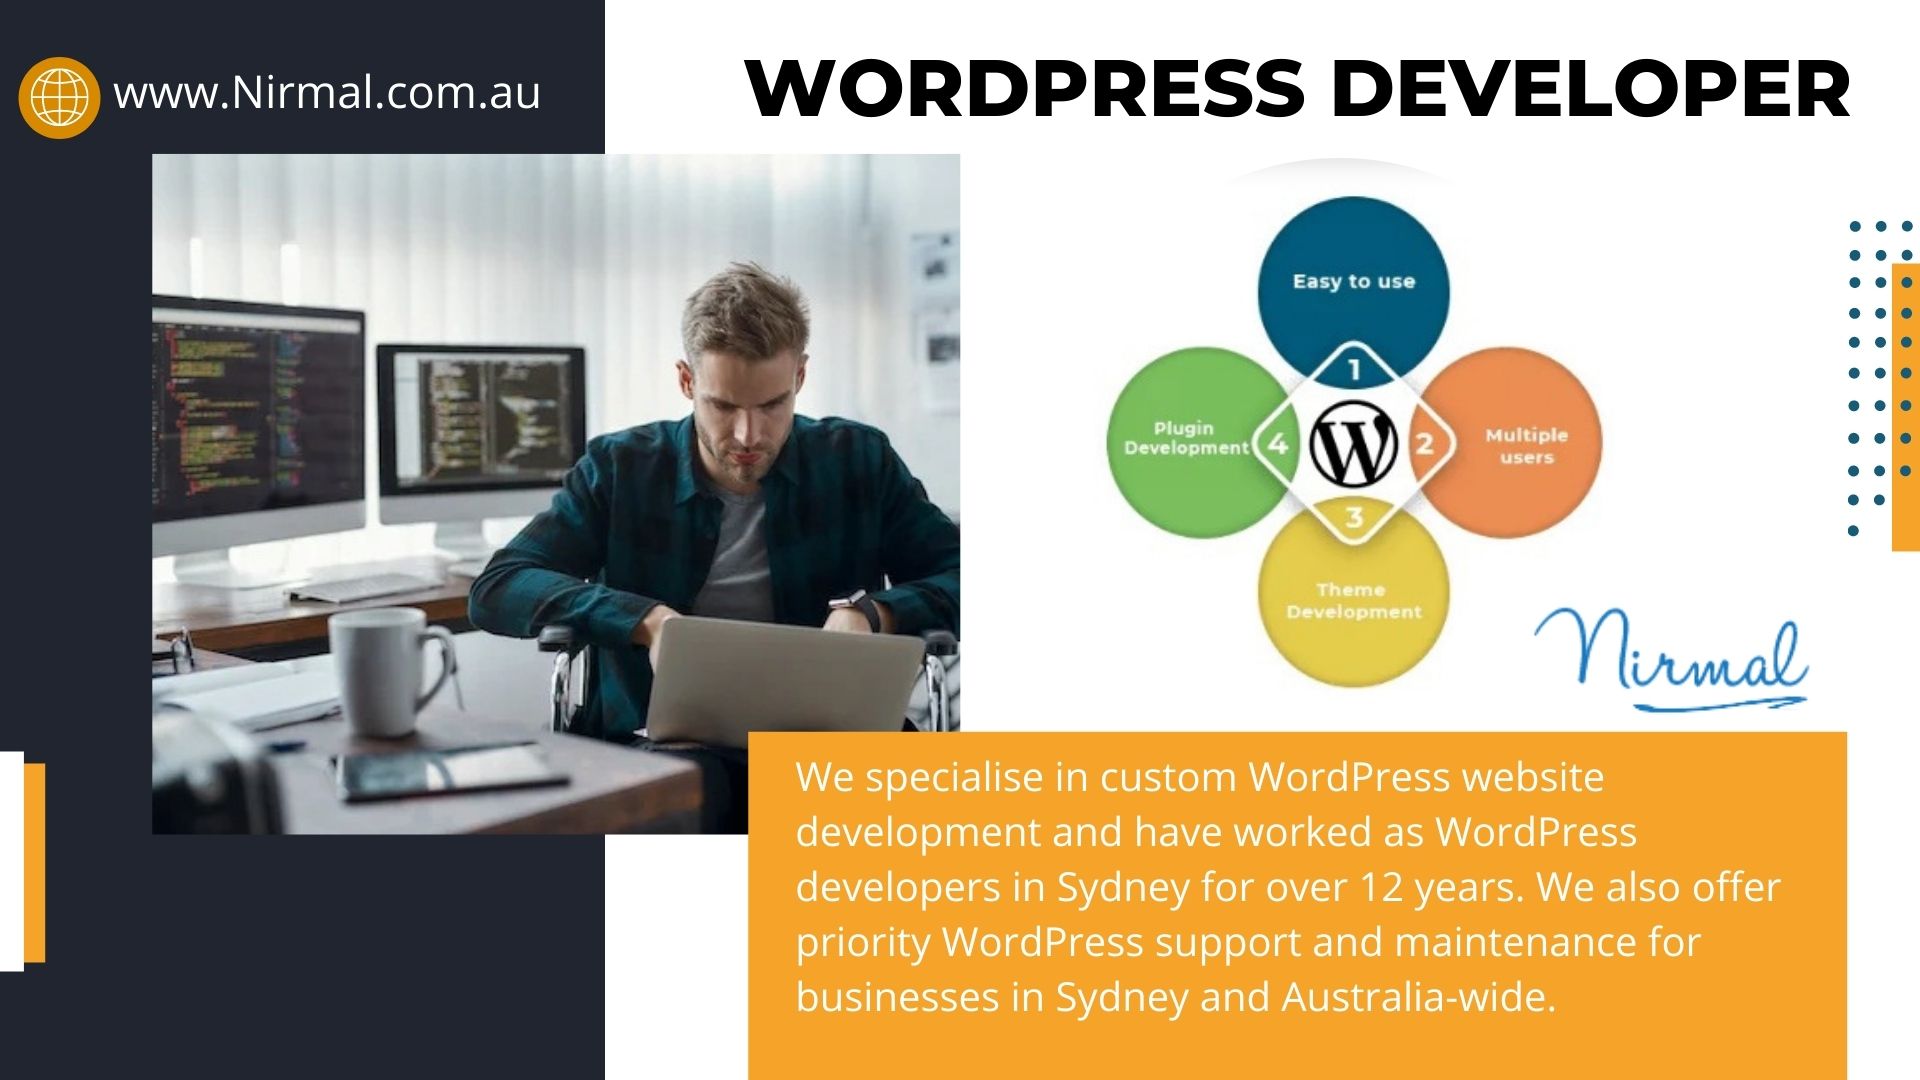 WordPress Development Support from experts – Sydney